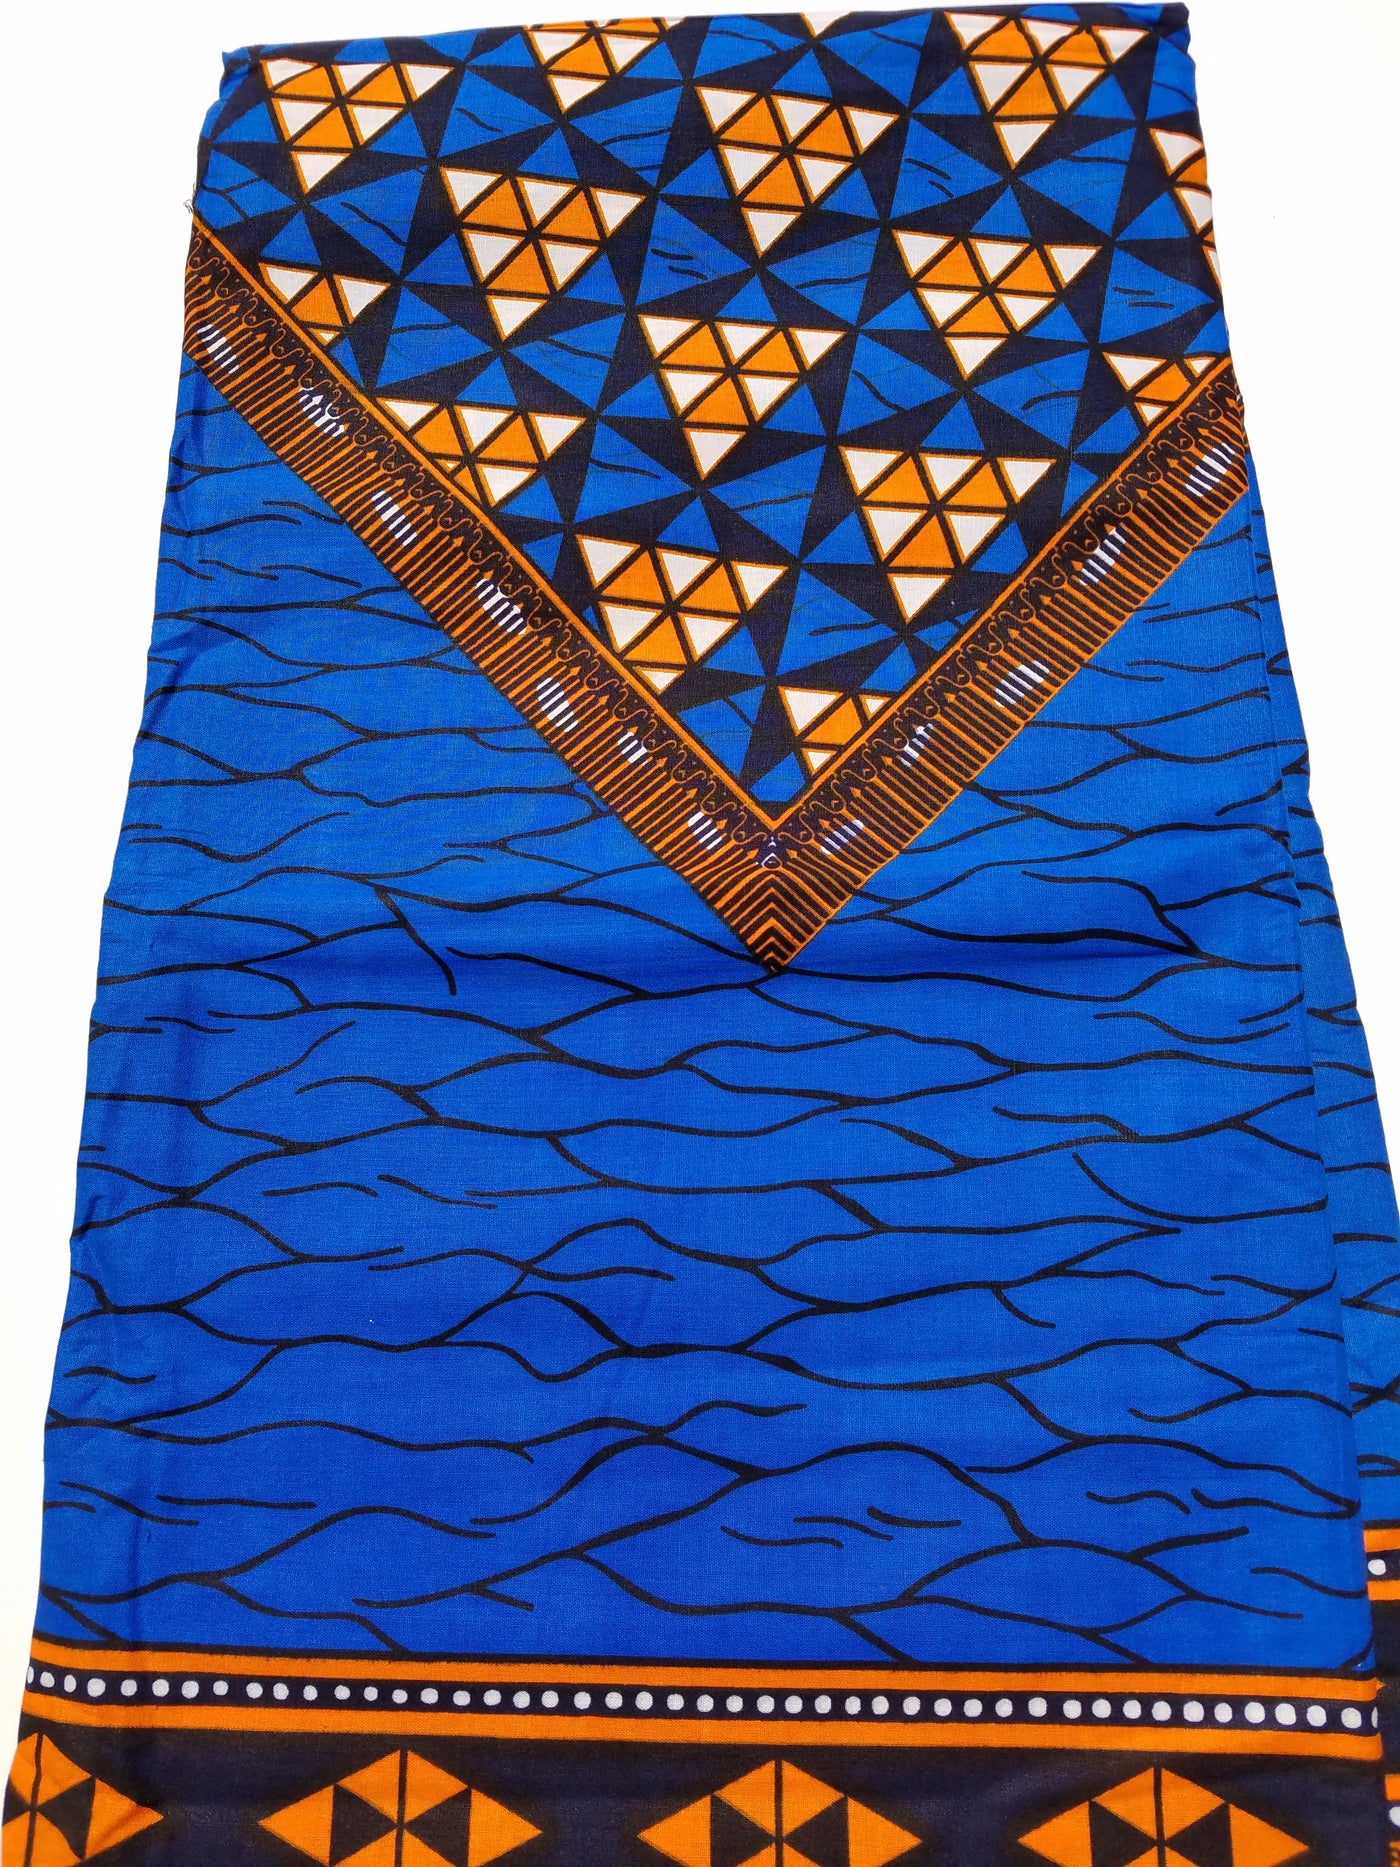 Royal Blue And Orange African Ankara Fabric